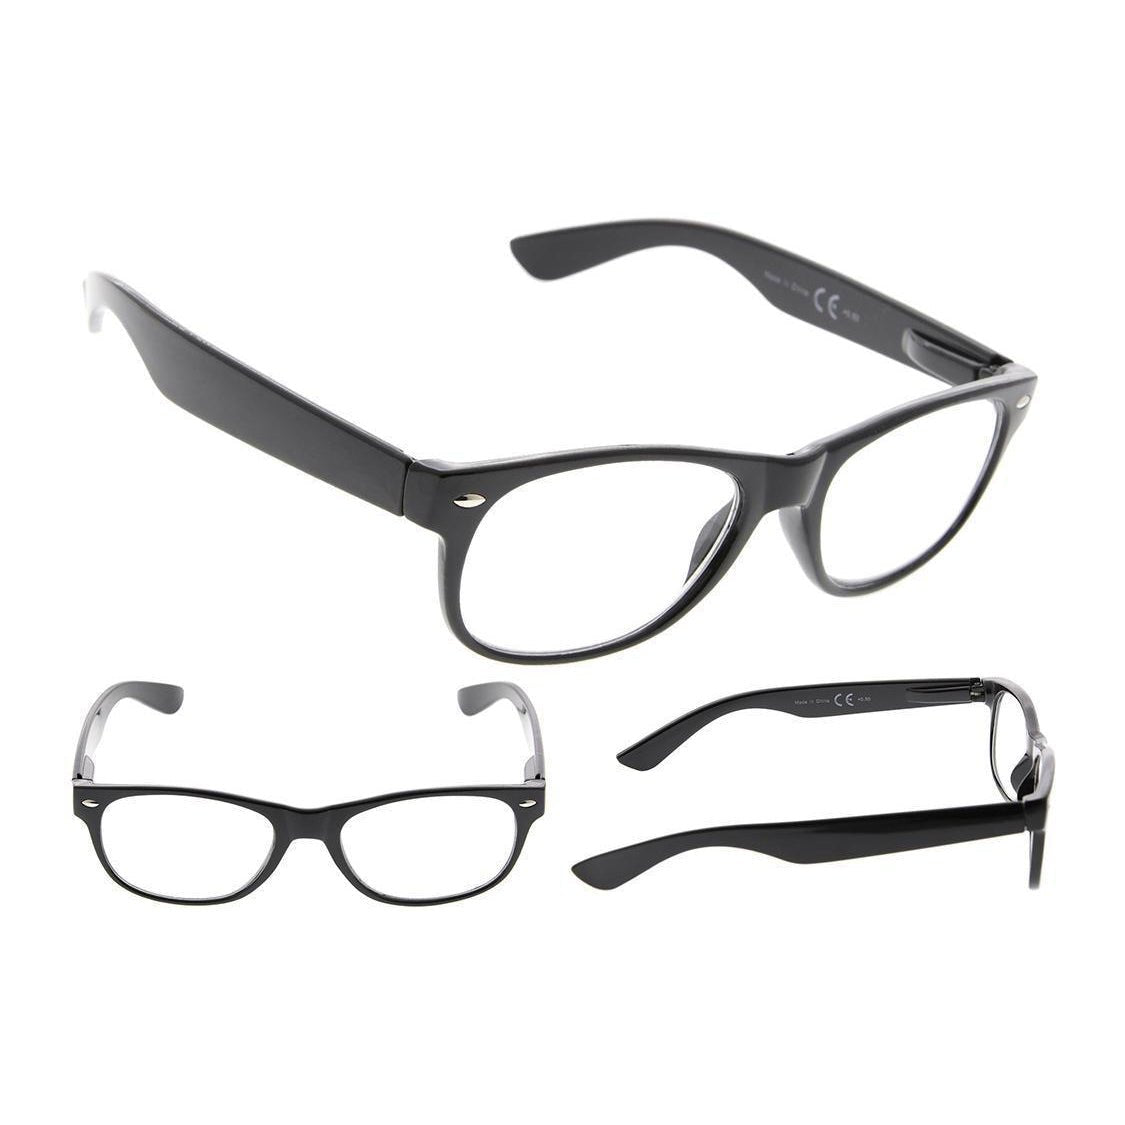 5 Pack Classic 80's Reading Glasses Include Sunglasses R011eyekeeper.com